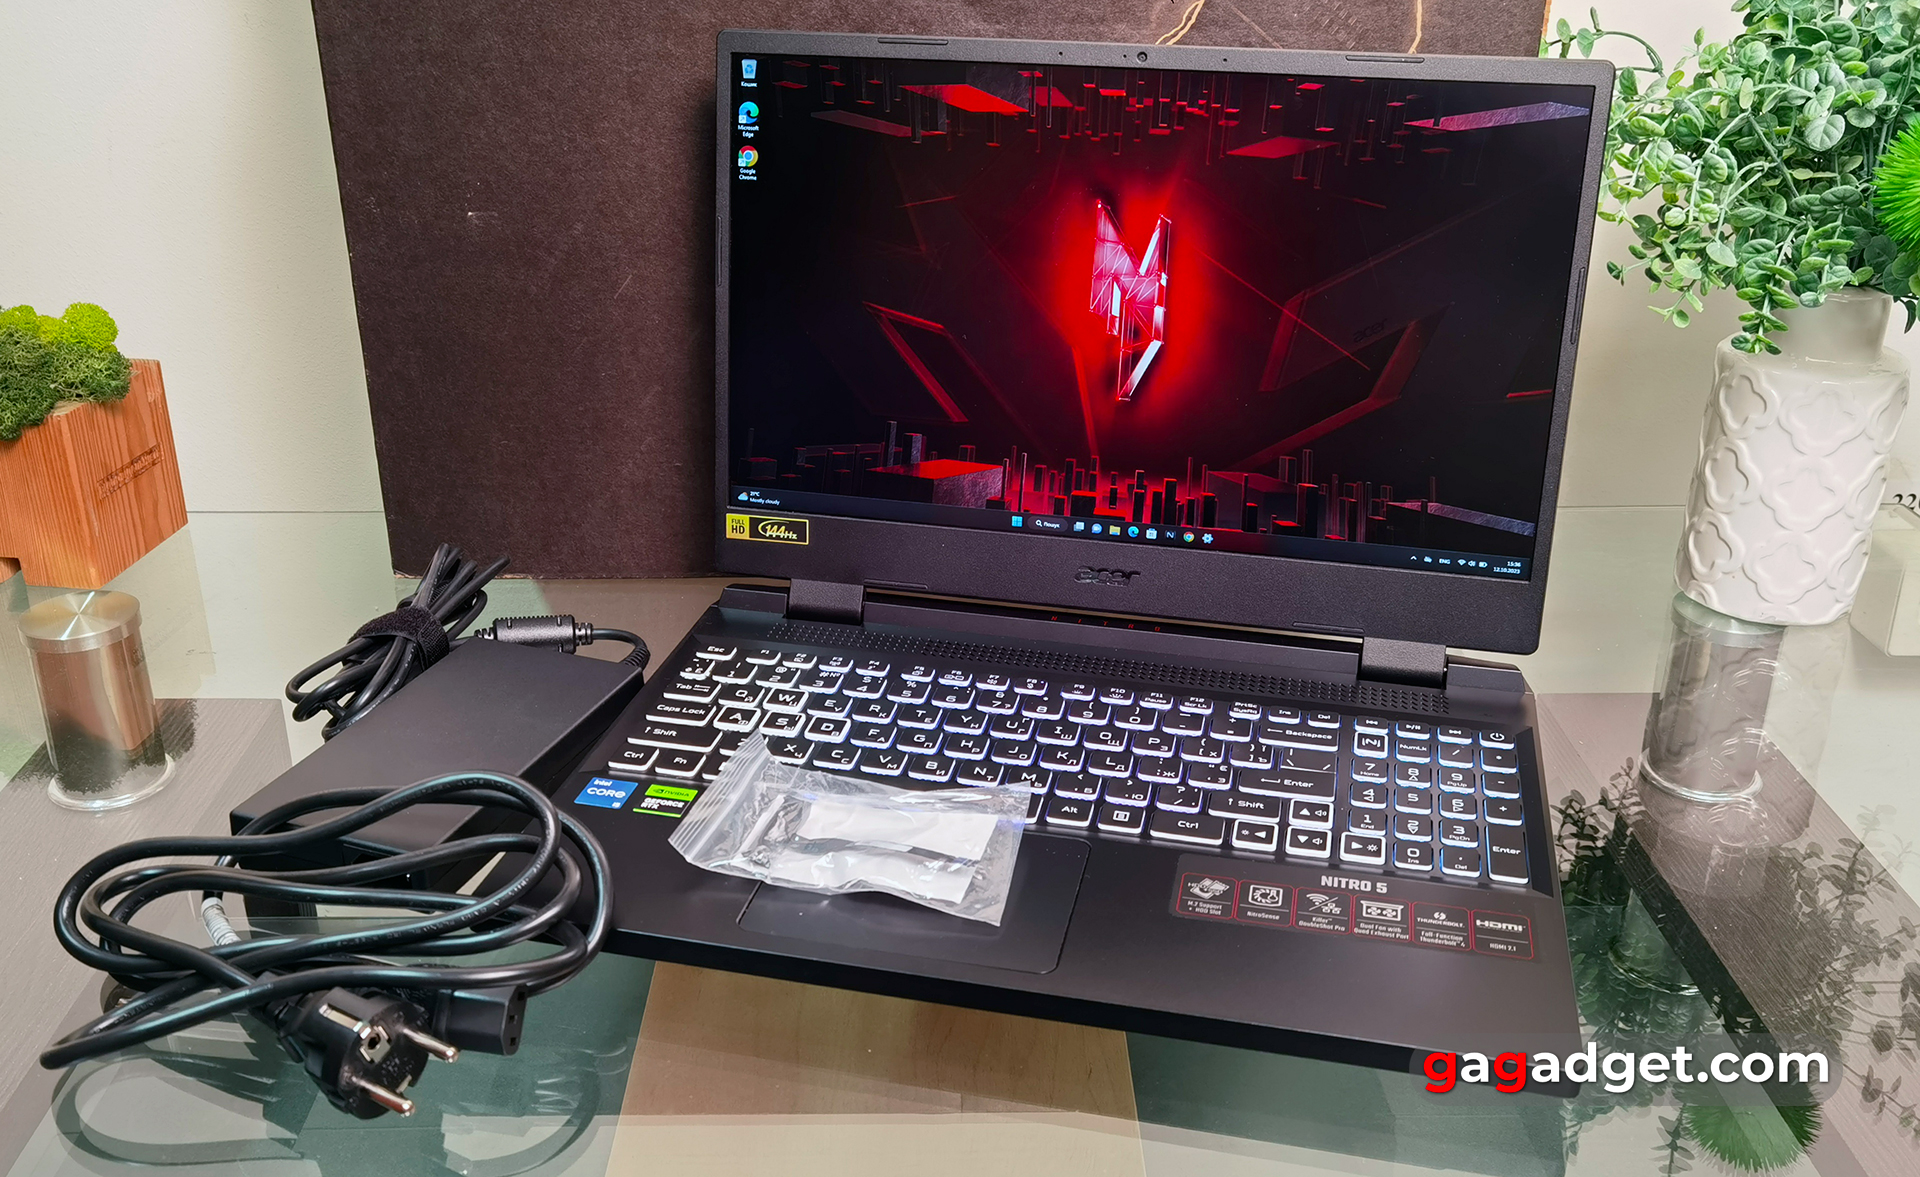 Acer 15.6 Nitro 5 Gaming Laptop AN515-58-73RS B&H Photo Video